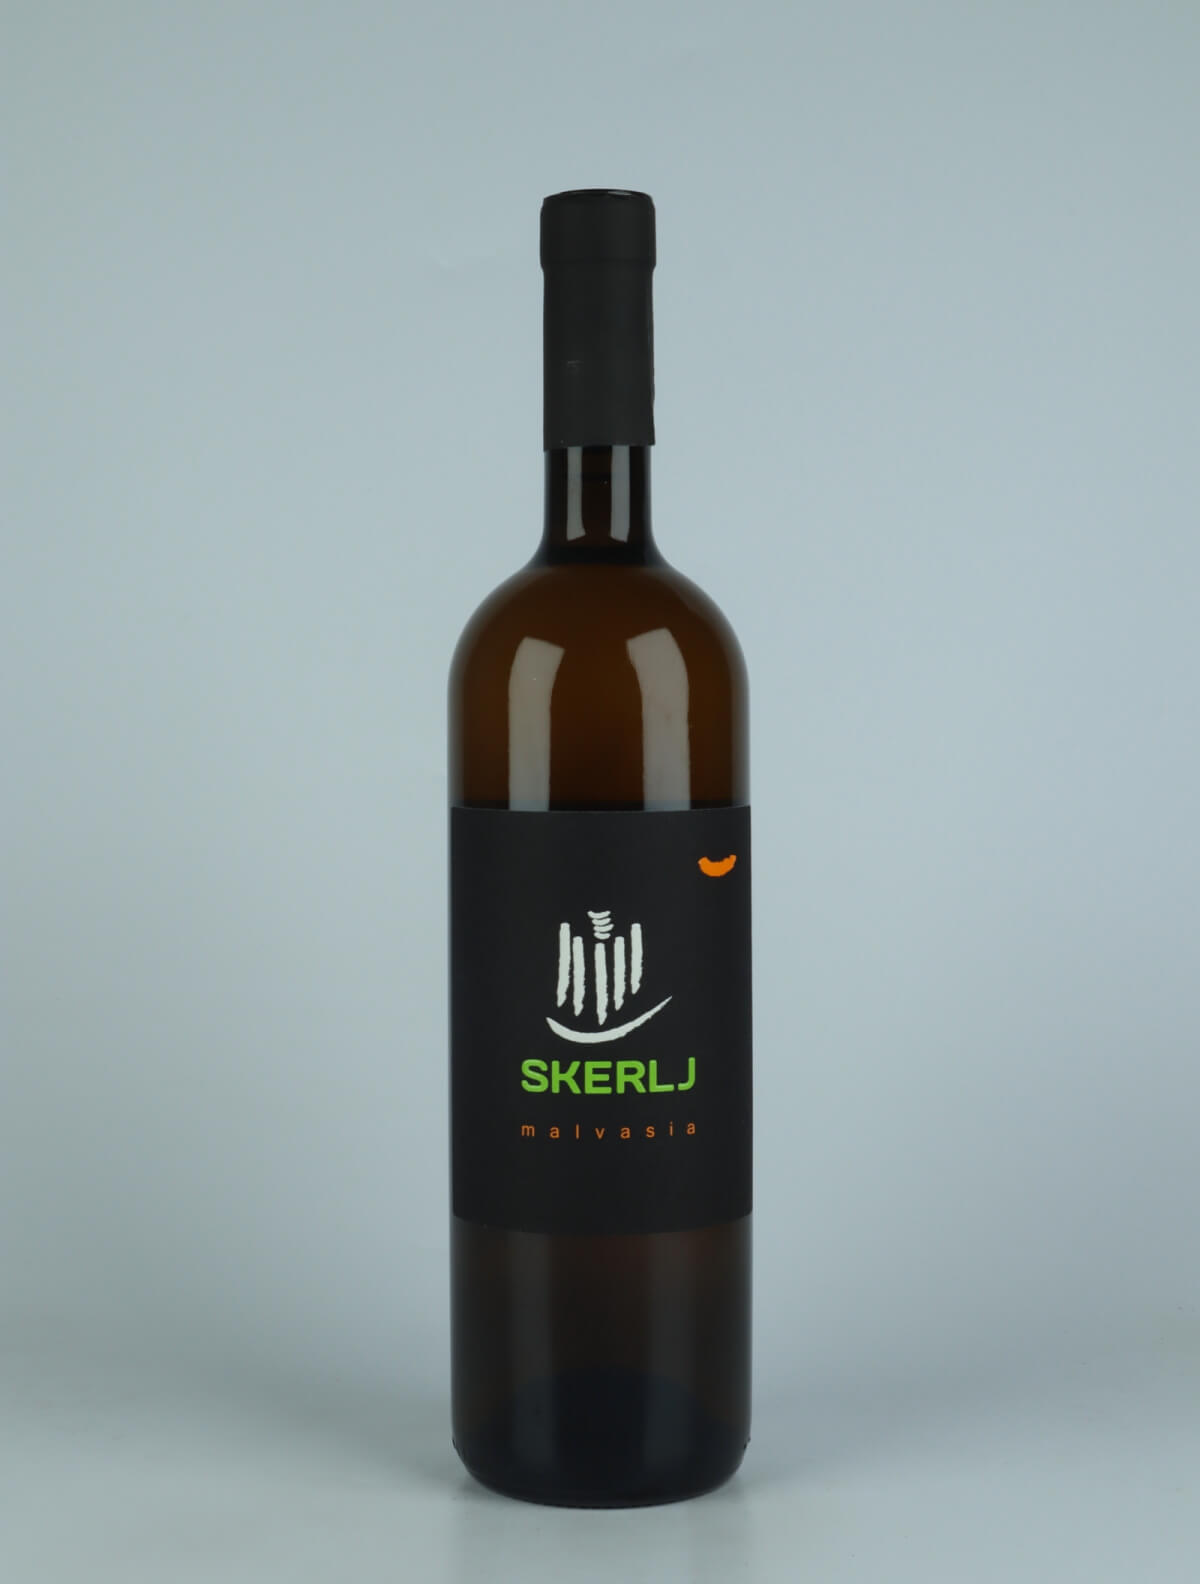 En flaske 2021 Malvasia Orange vin fra Skerlj, Friuli i Italien